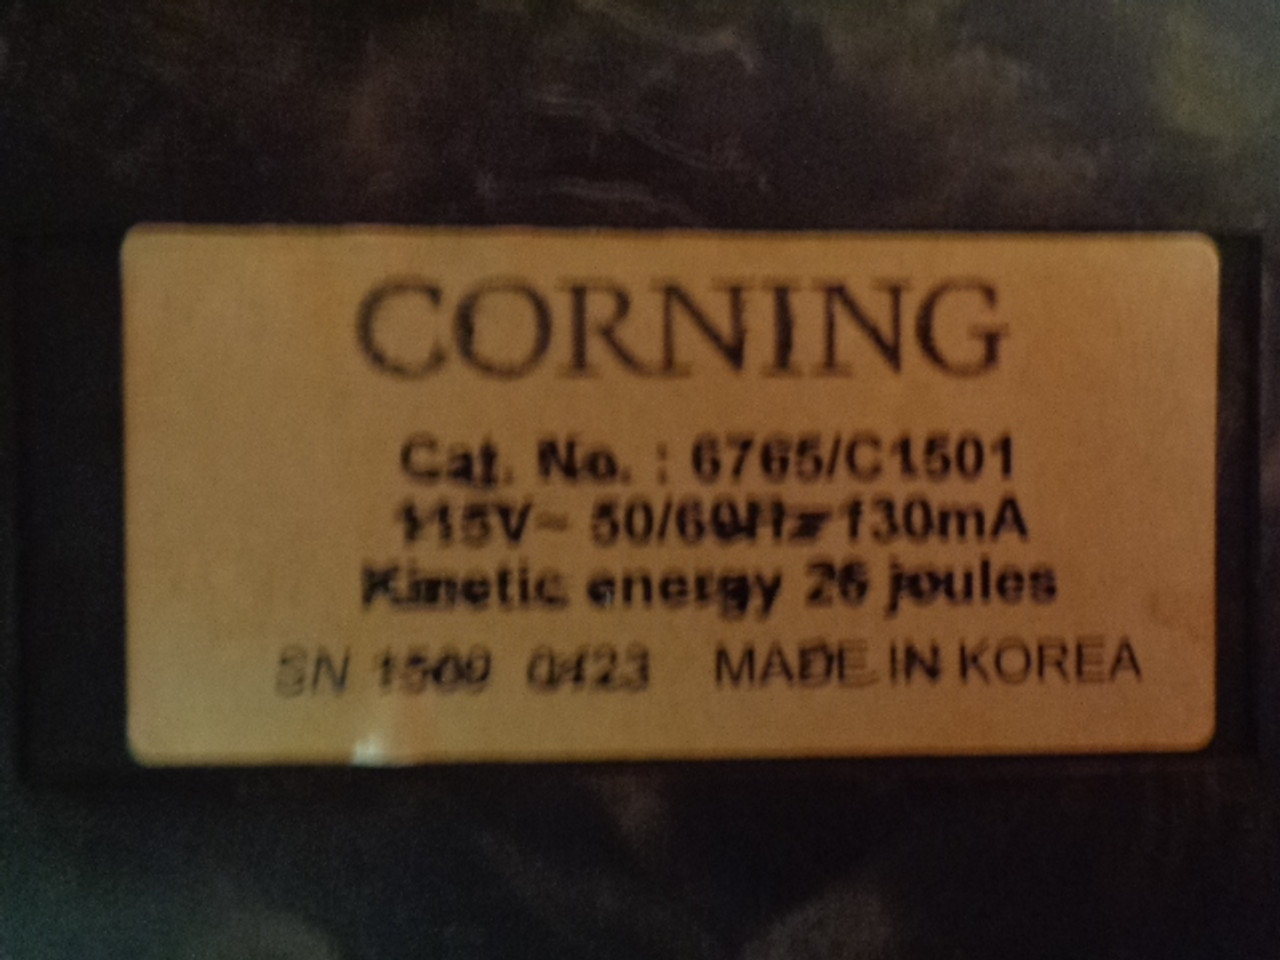 Corning Cat No. 6765/C1501 Mini Centrifuge